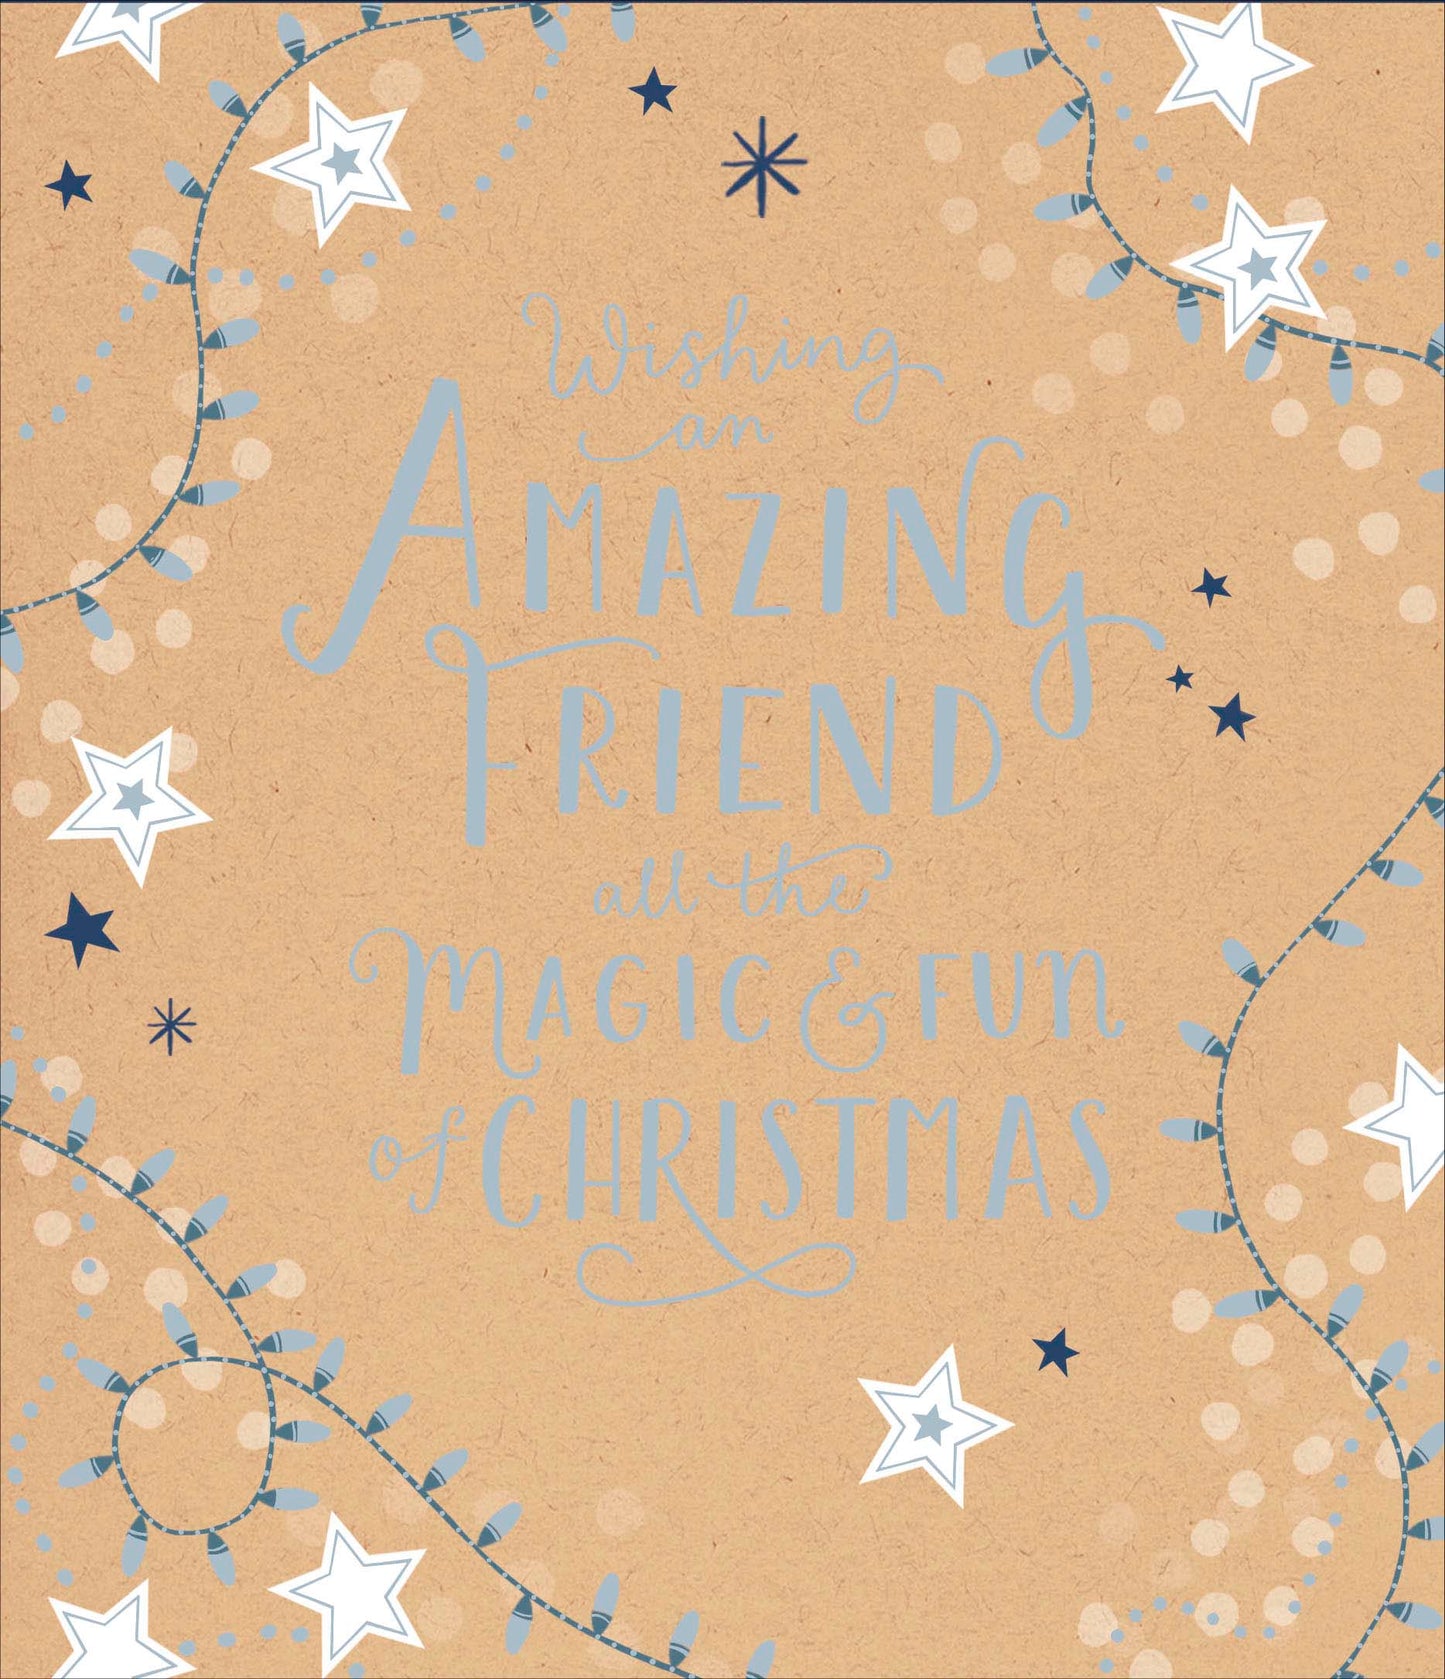 An Amazing Friend Magic & Fun Special Christmas Greeting Card